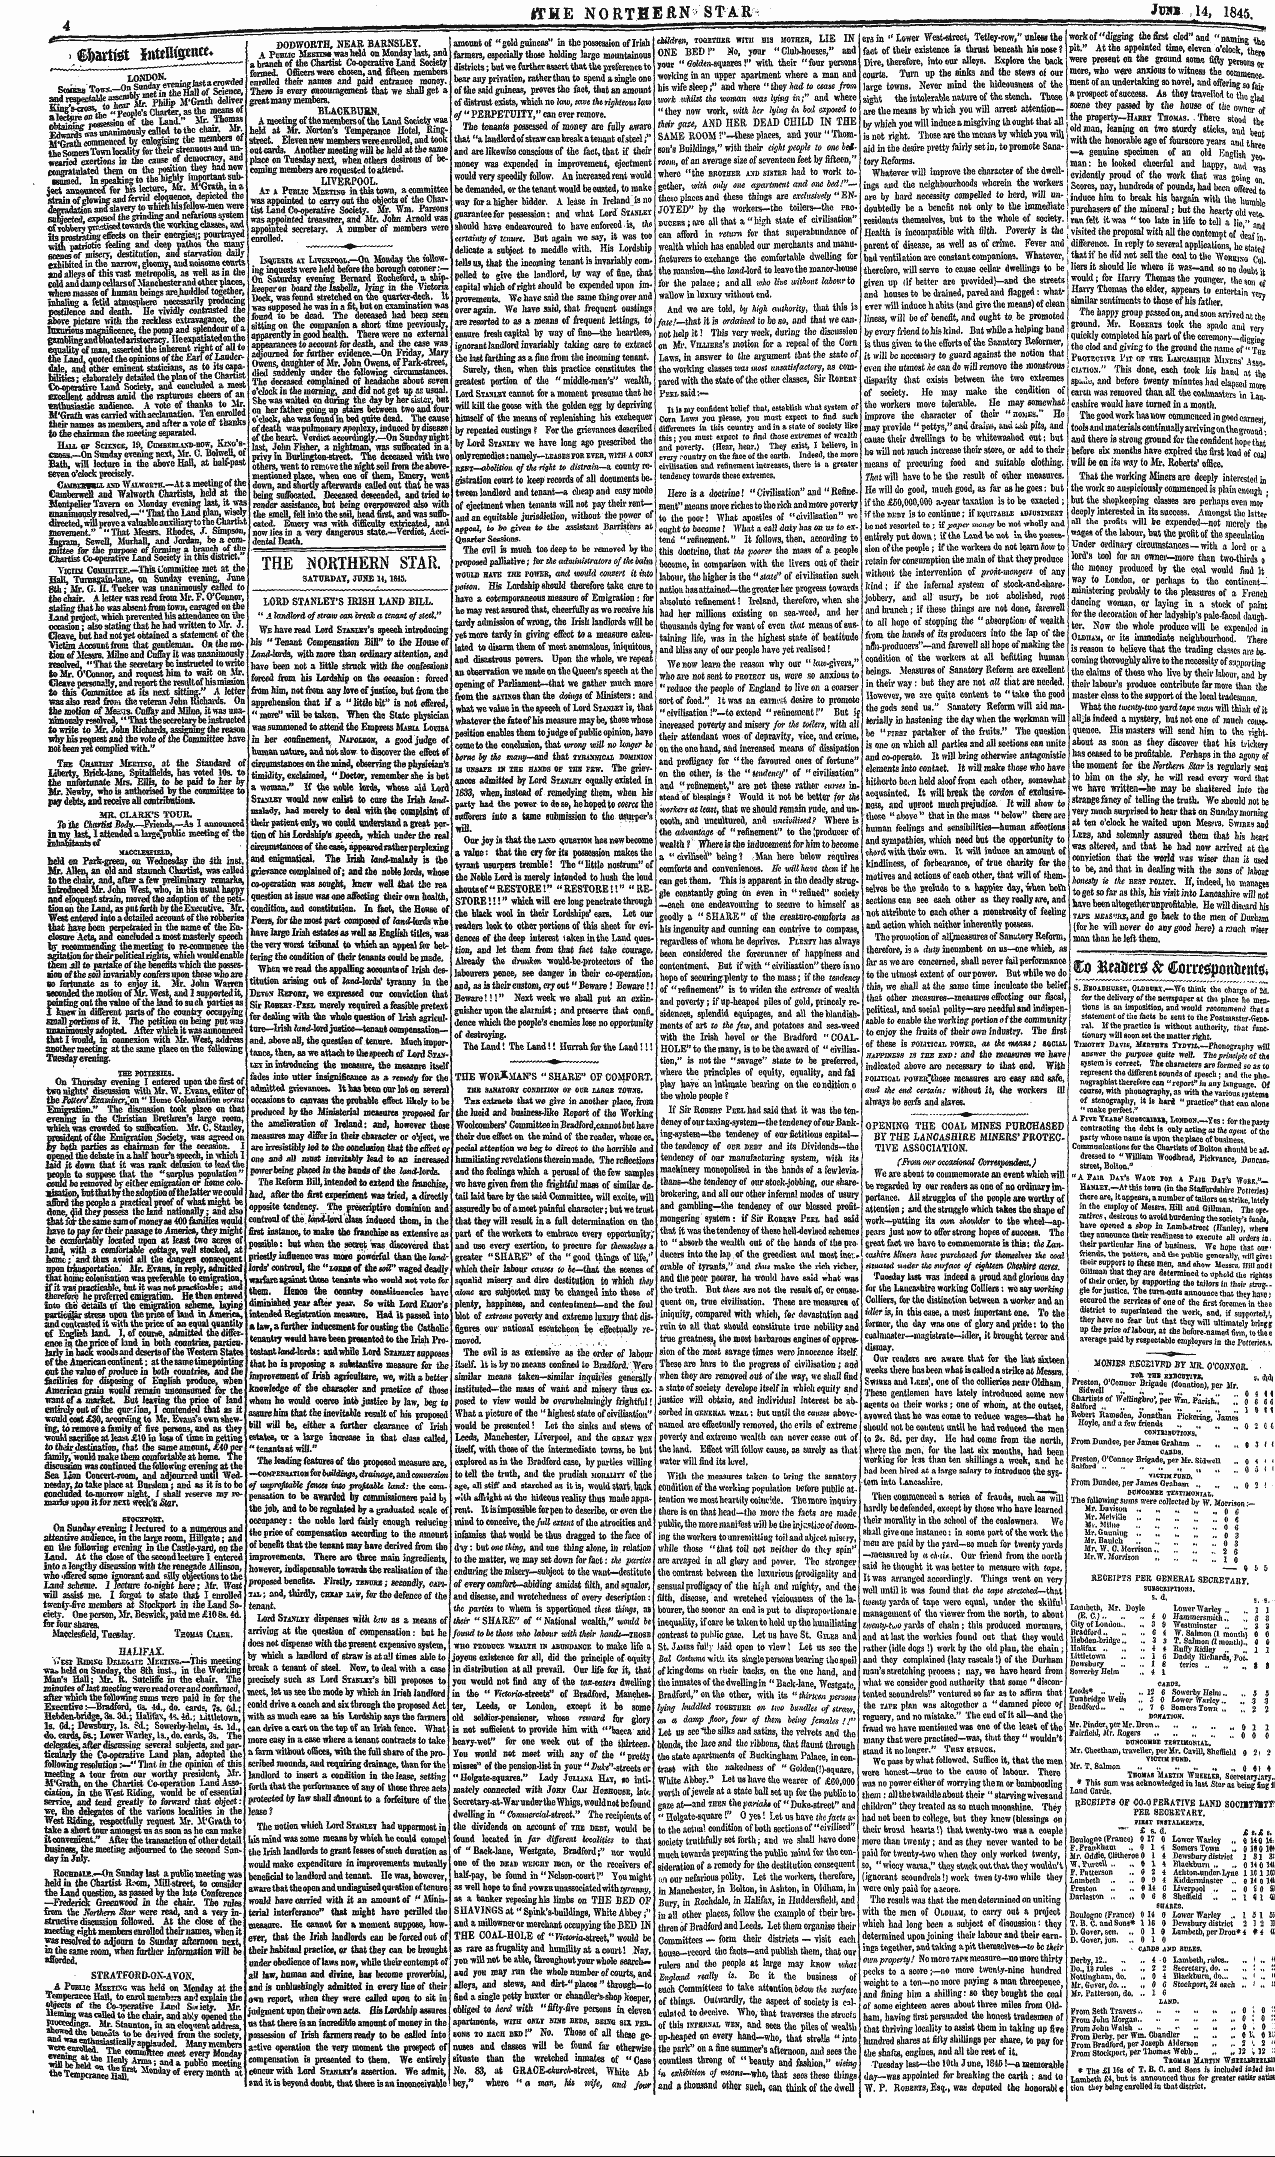 Northern Star (1837-1852): jS F Y, 3rd edition - Iyhe Northern Star^ Jura ,14, 1845 .